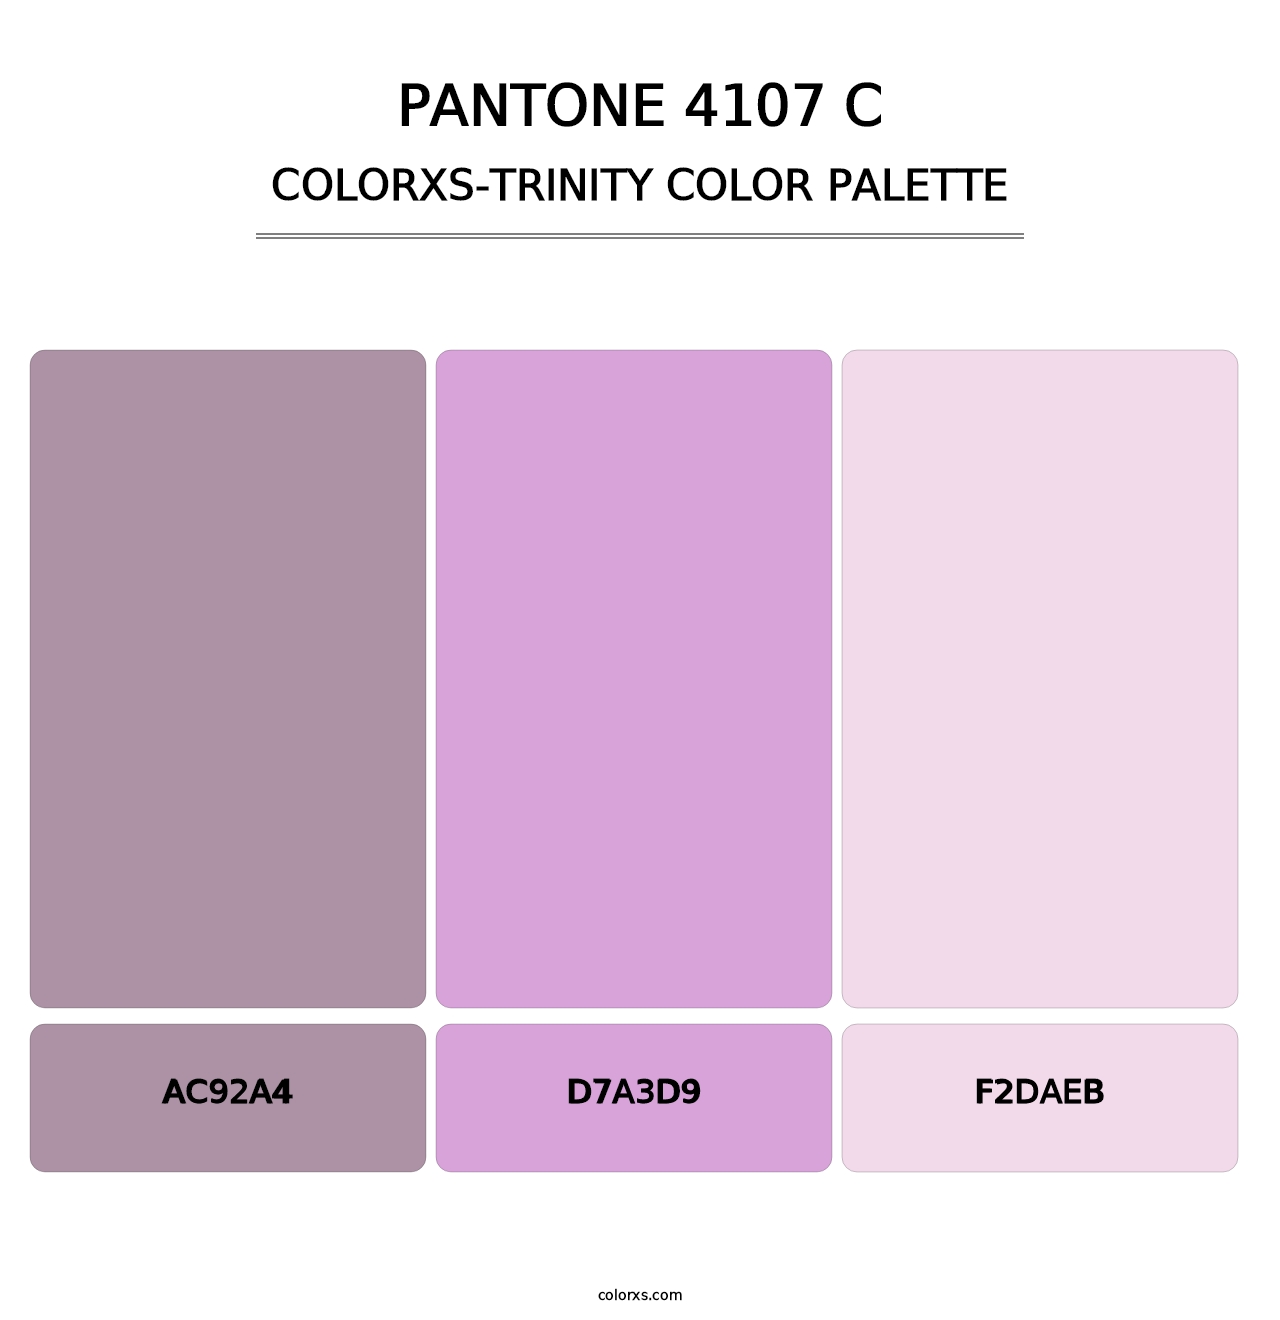 PANTONE 4107 C - Colorxs Trinity Palette